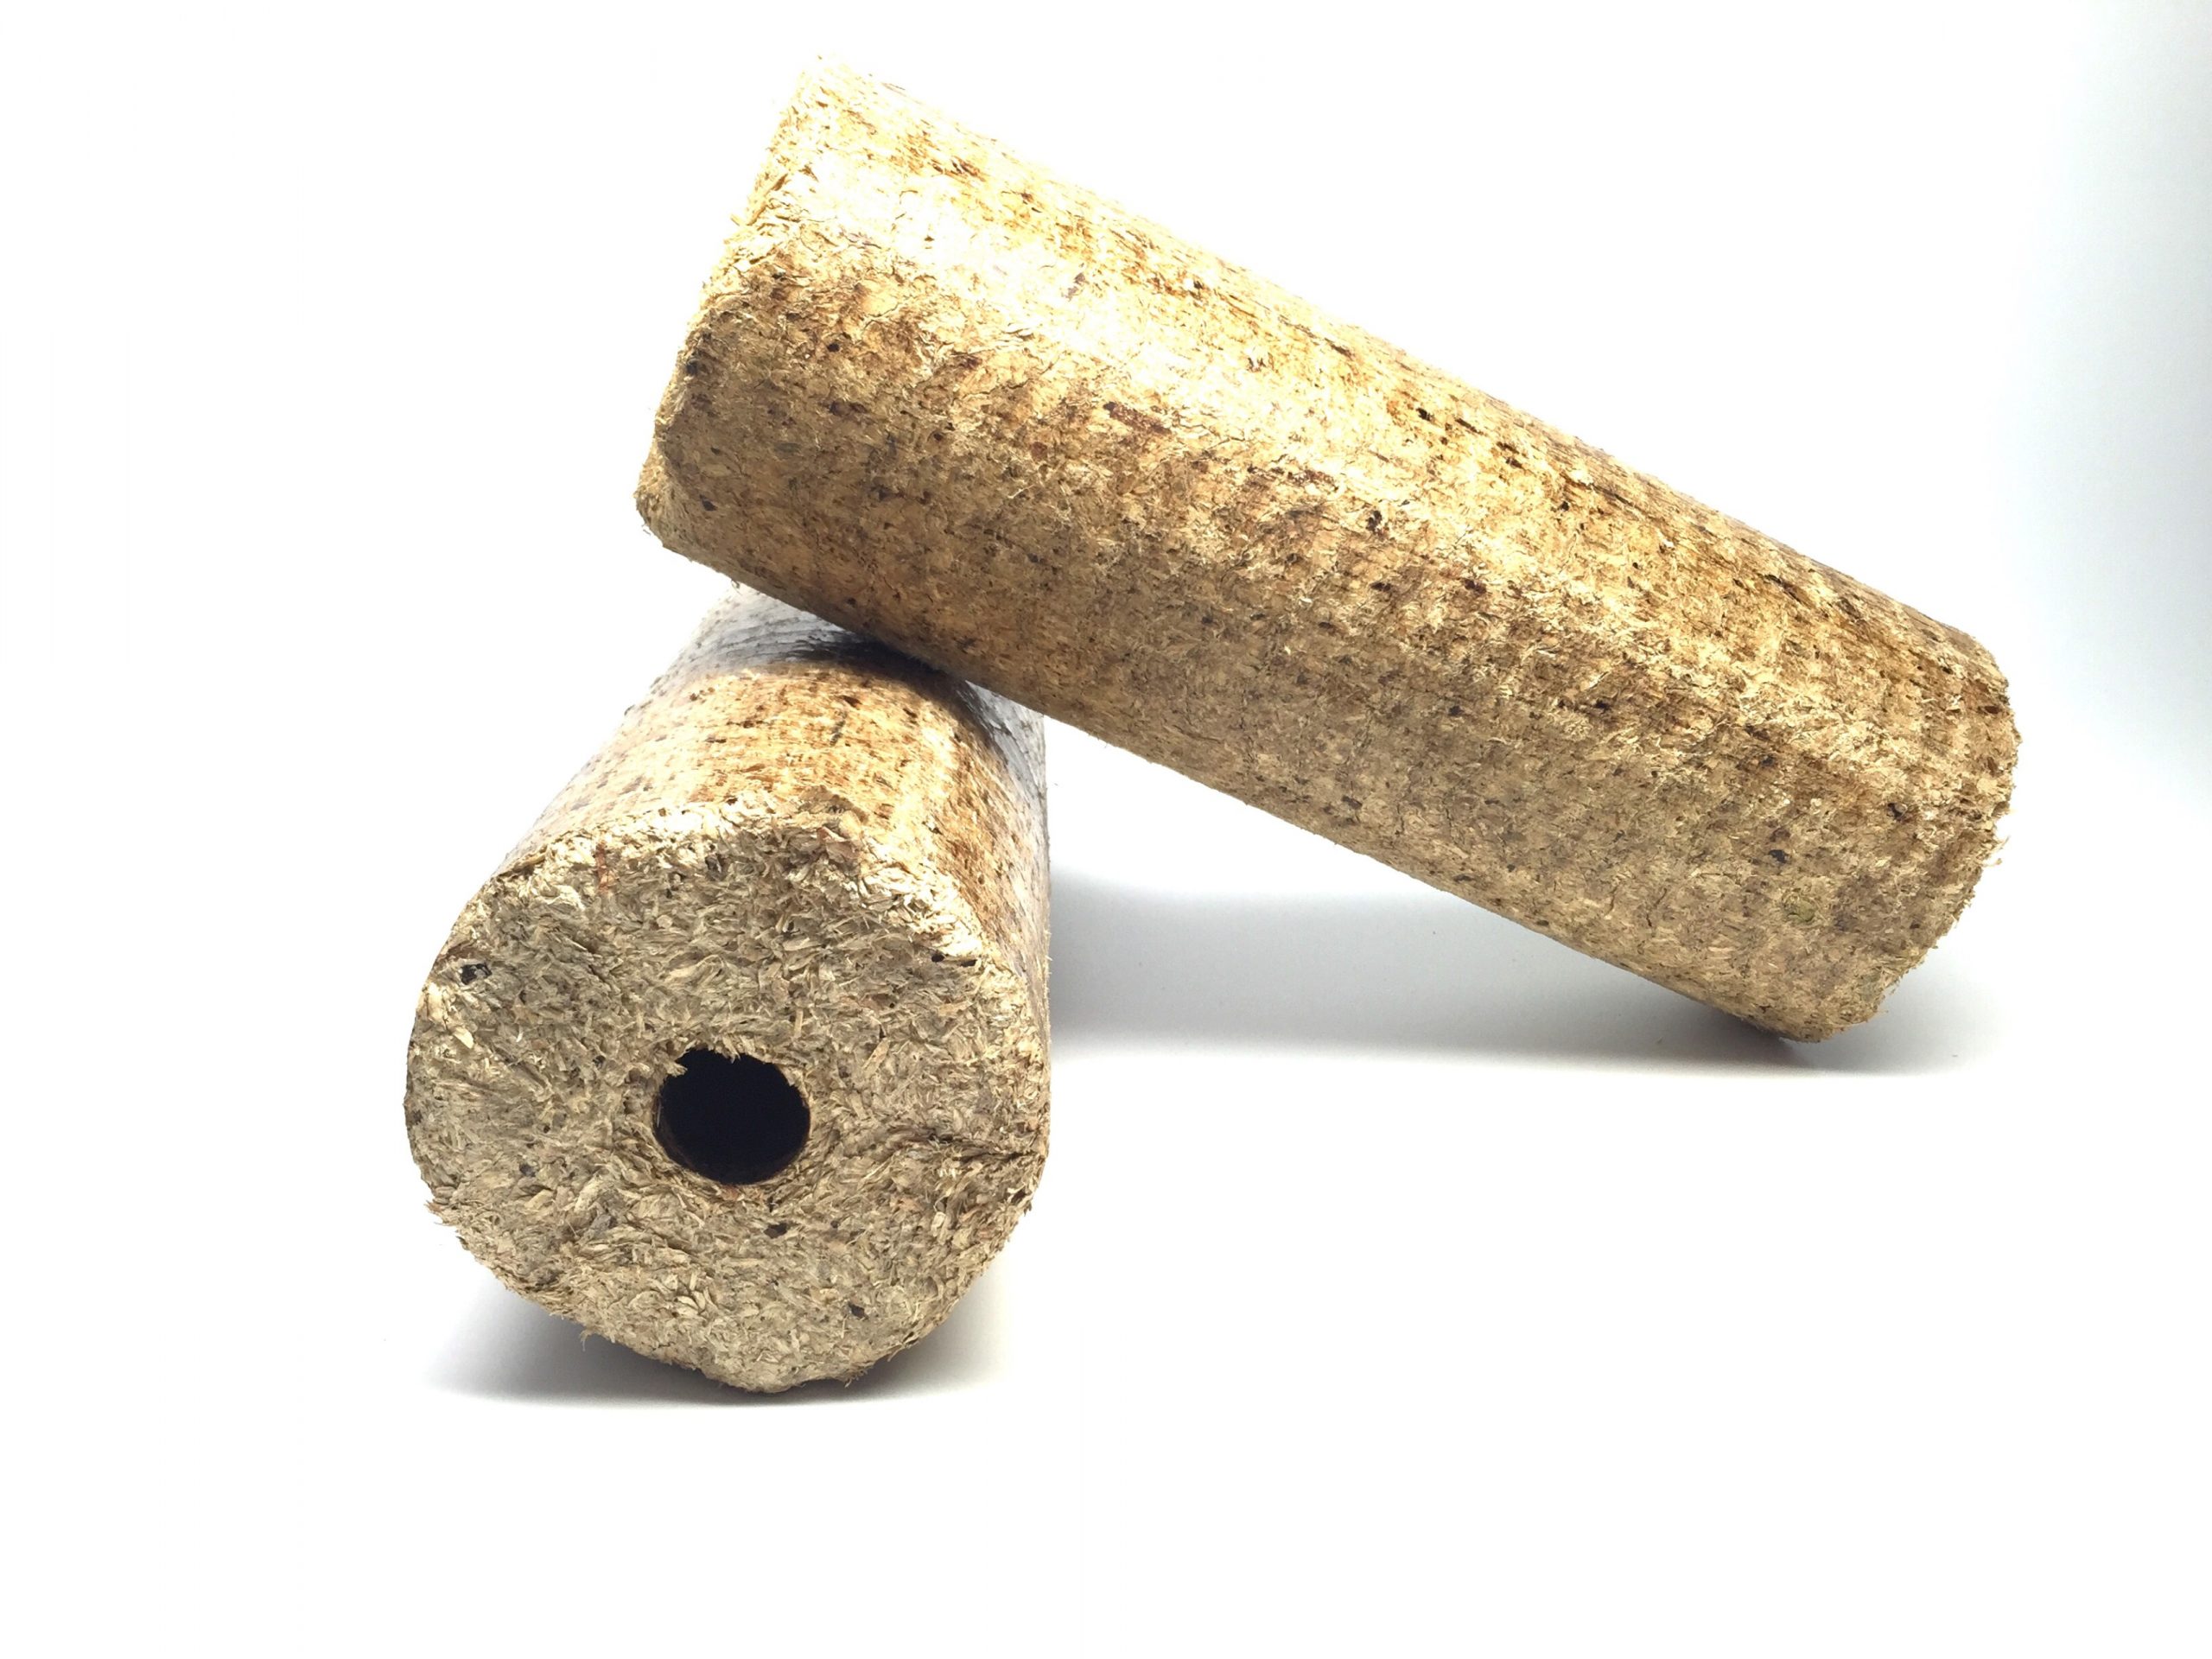 What makes briquettes and pellets so different?